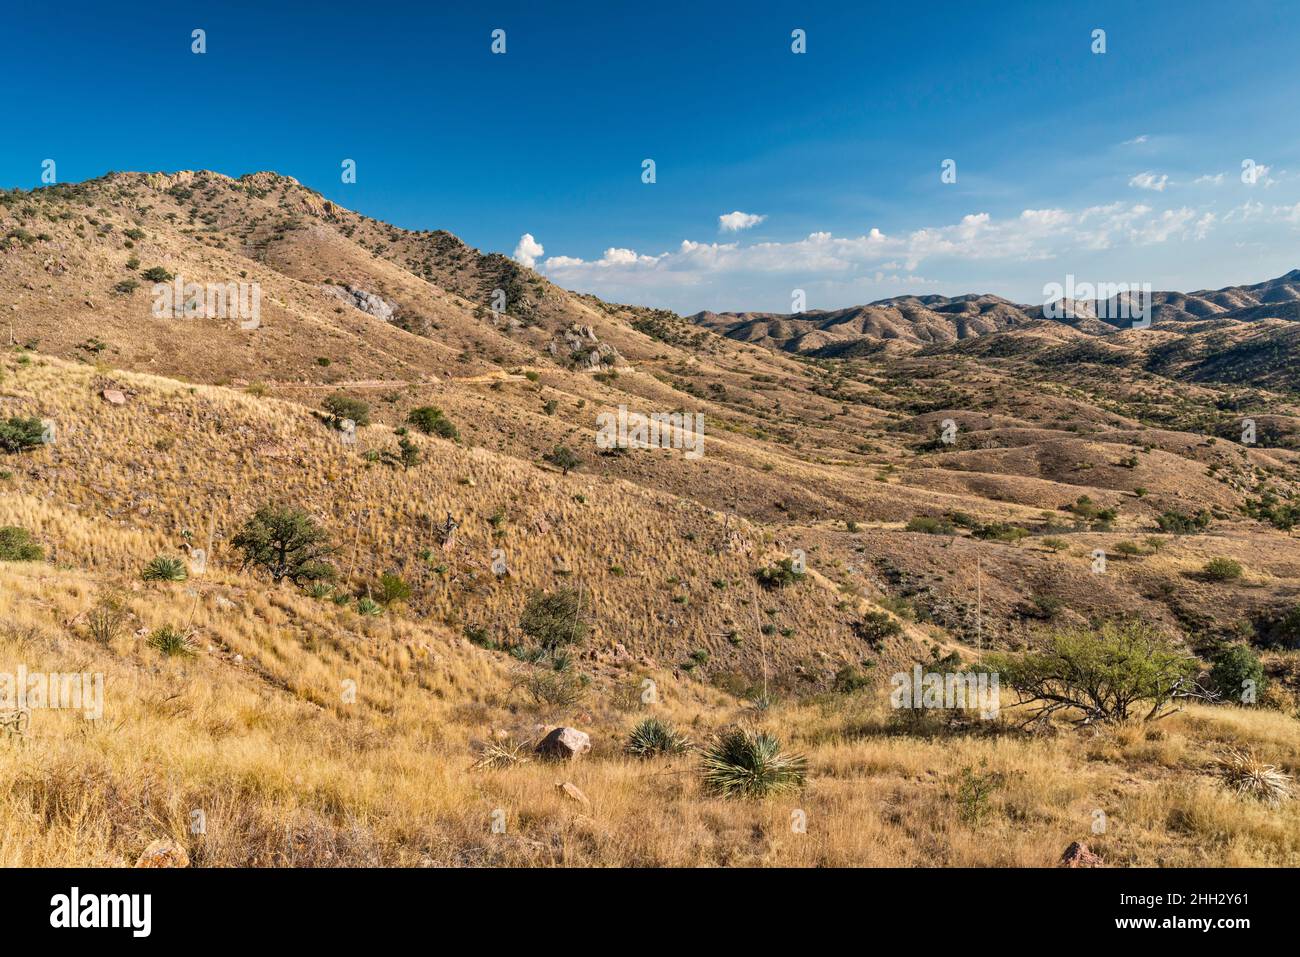 Atascosa Mountains, near Mexican border, view from Ruby Road, Coronado National Forest, Arizona, USA Stock Photo